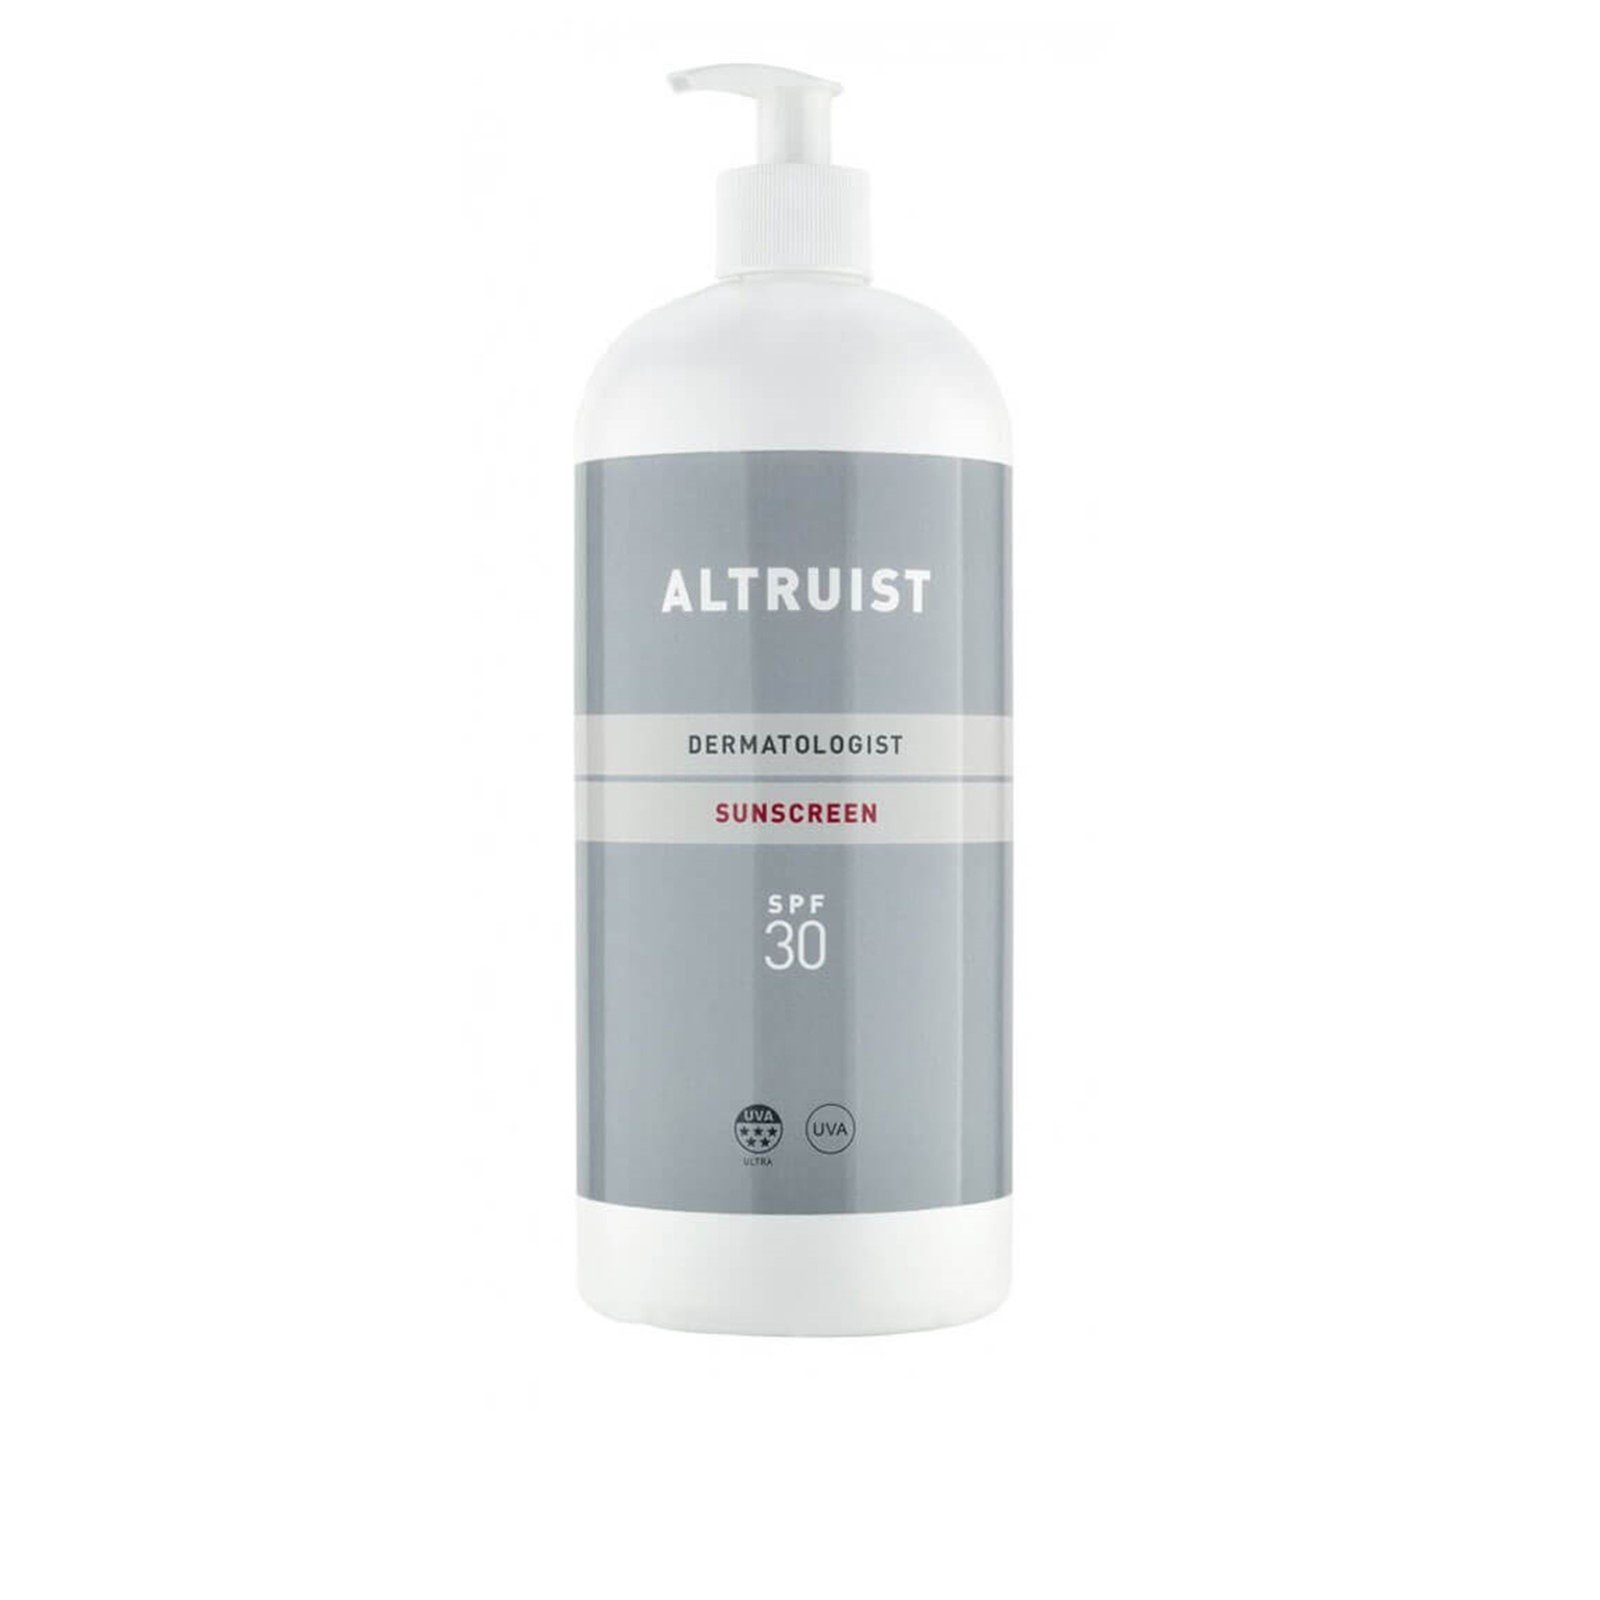 Altruist Sunscreen SPF30 1L (33.8 fl oz)